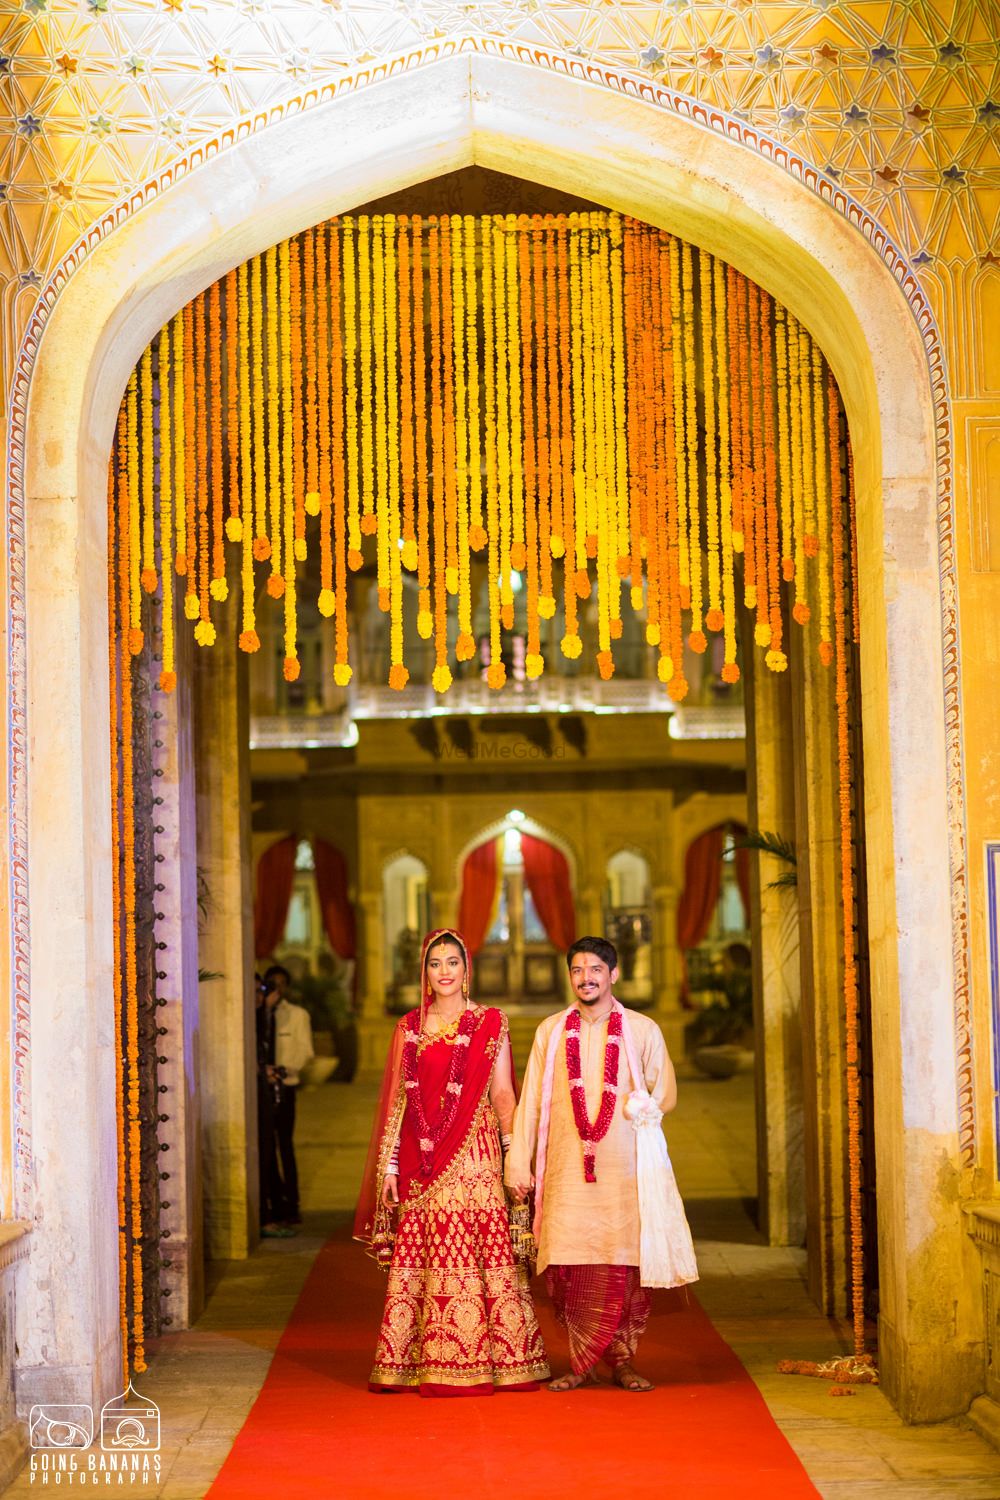 Photo of Couple portrait at entrance way